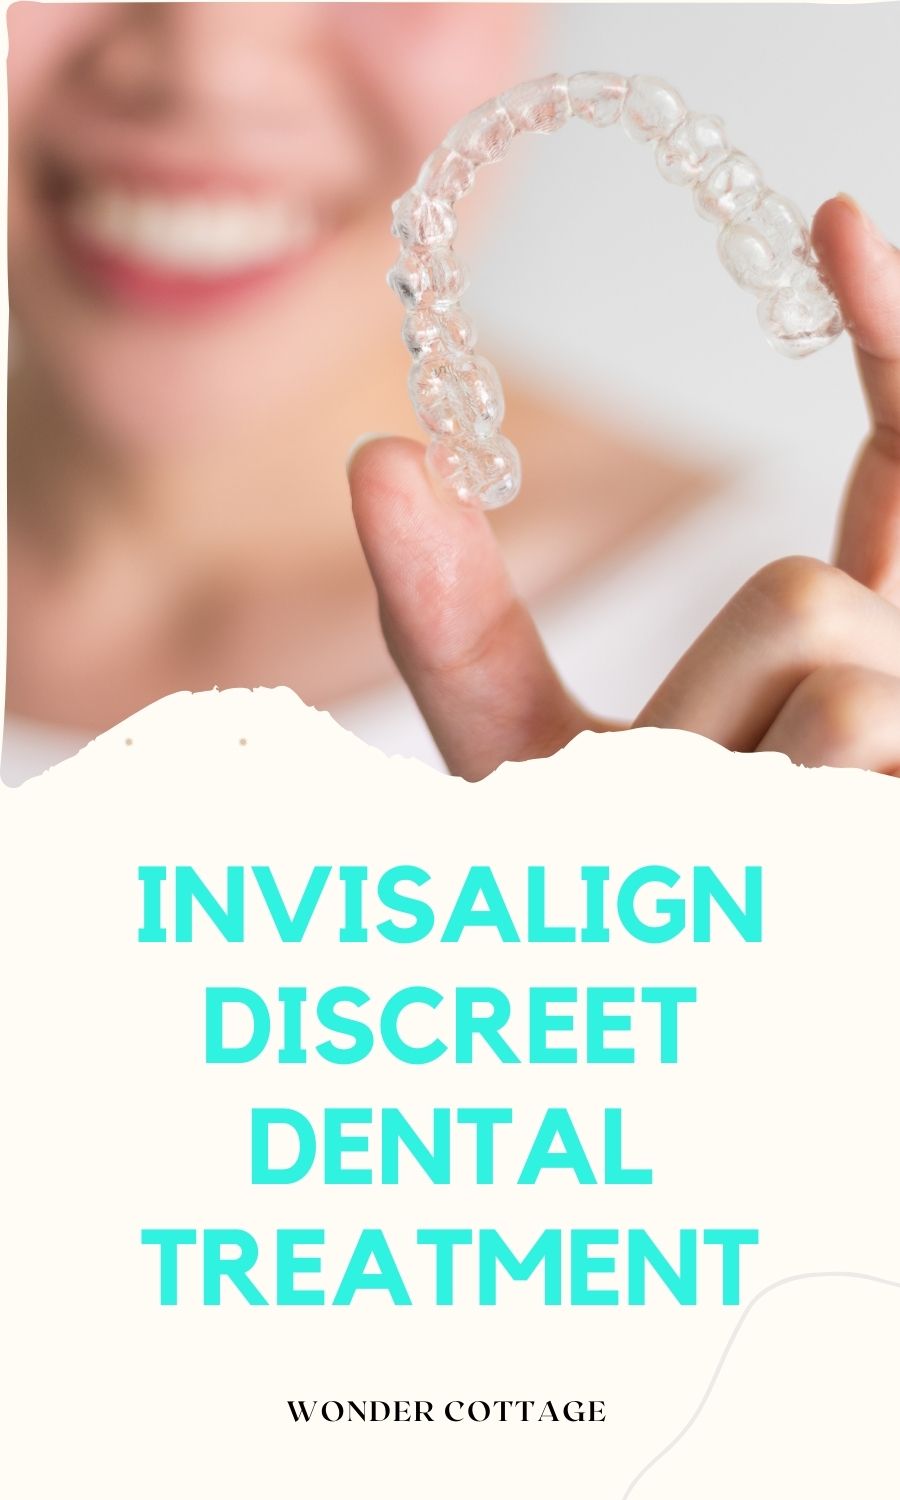 Invisalign Discreet Dental Treatment